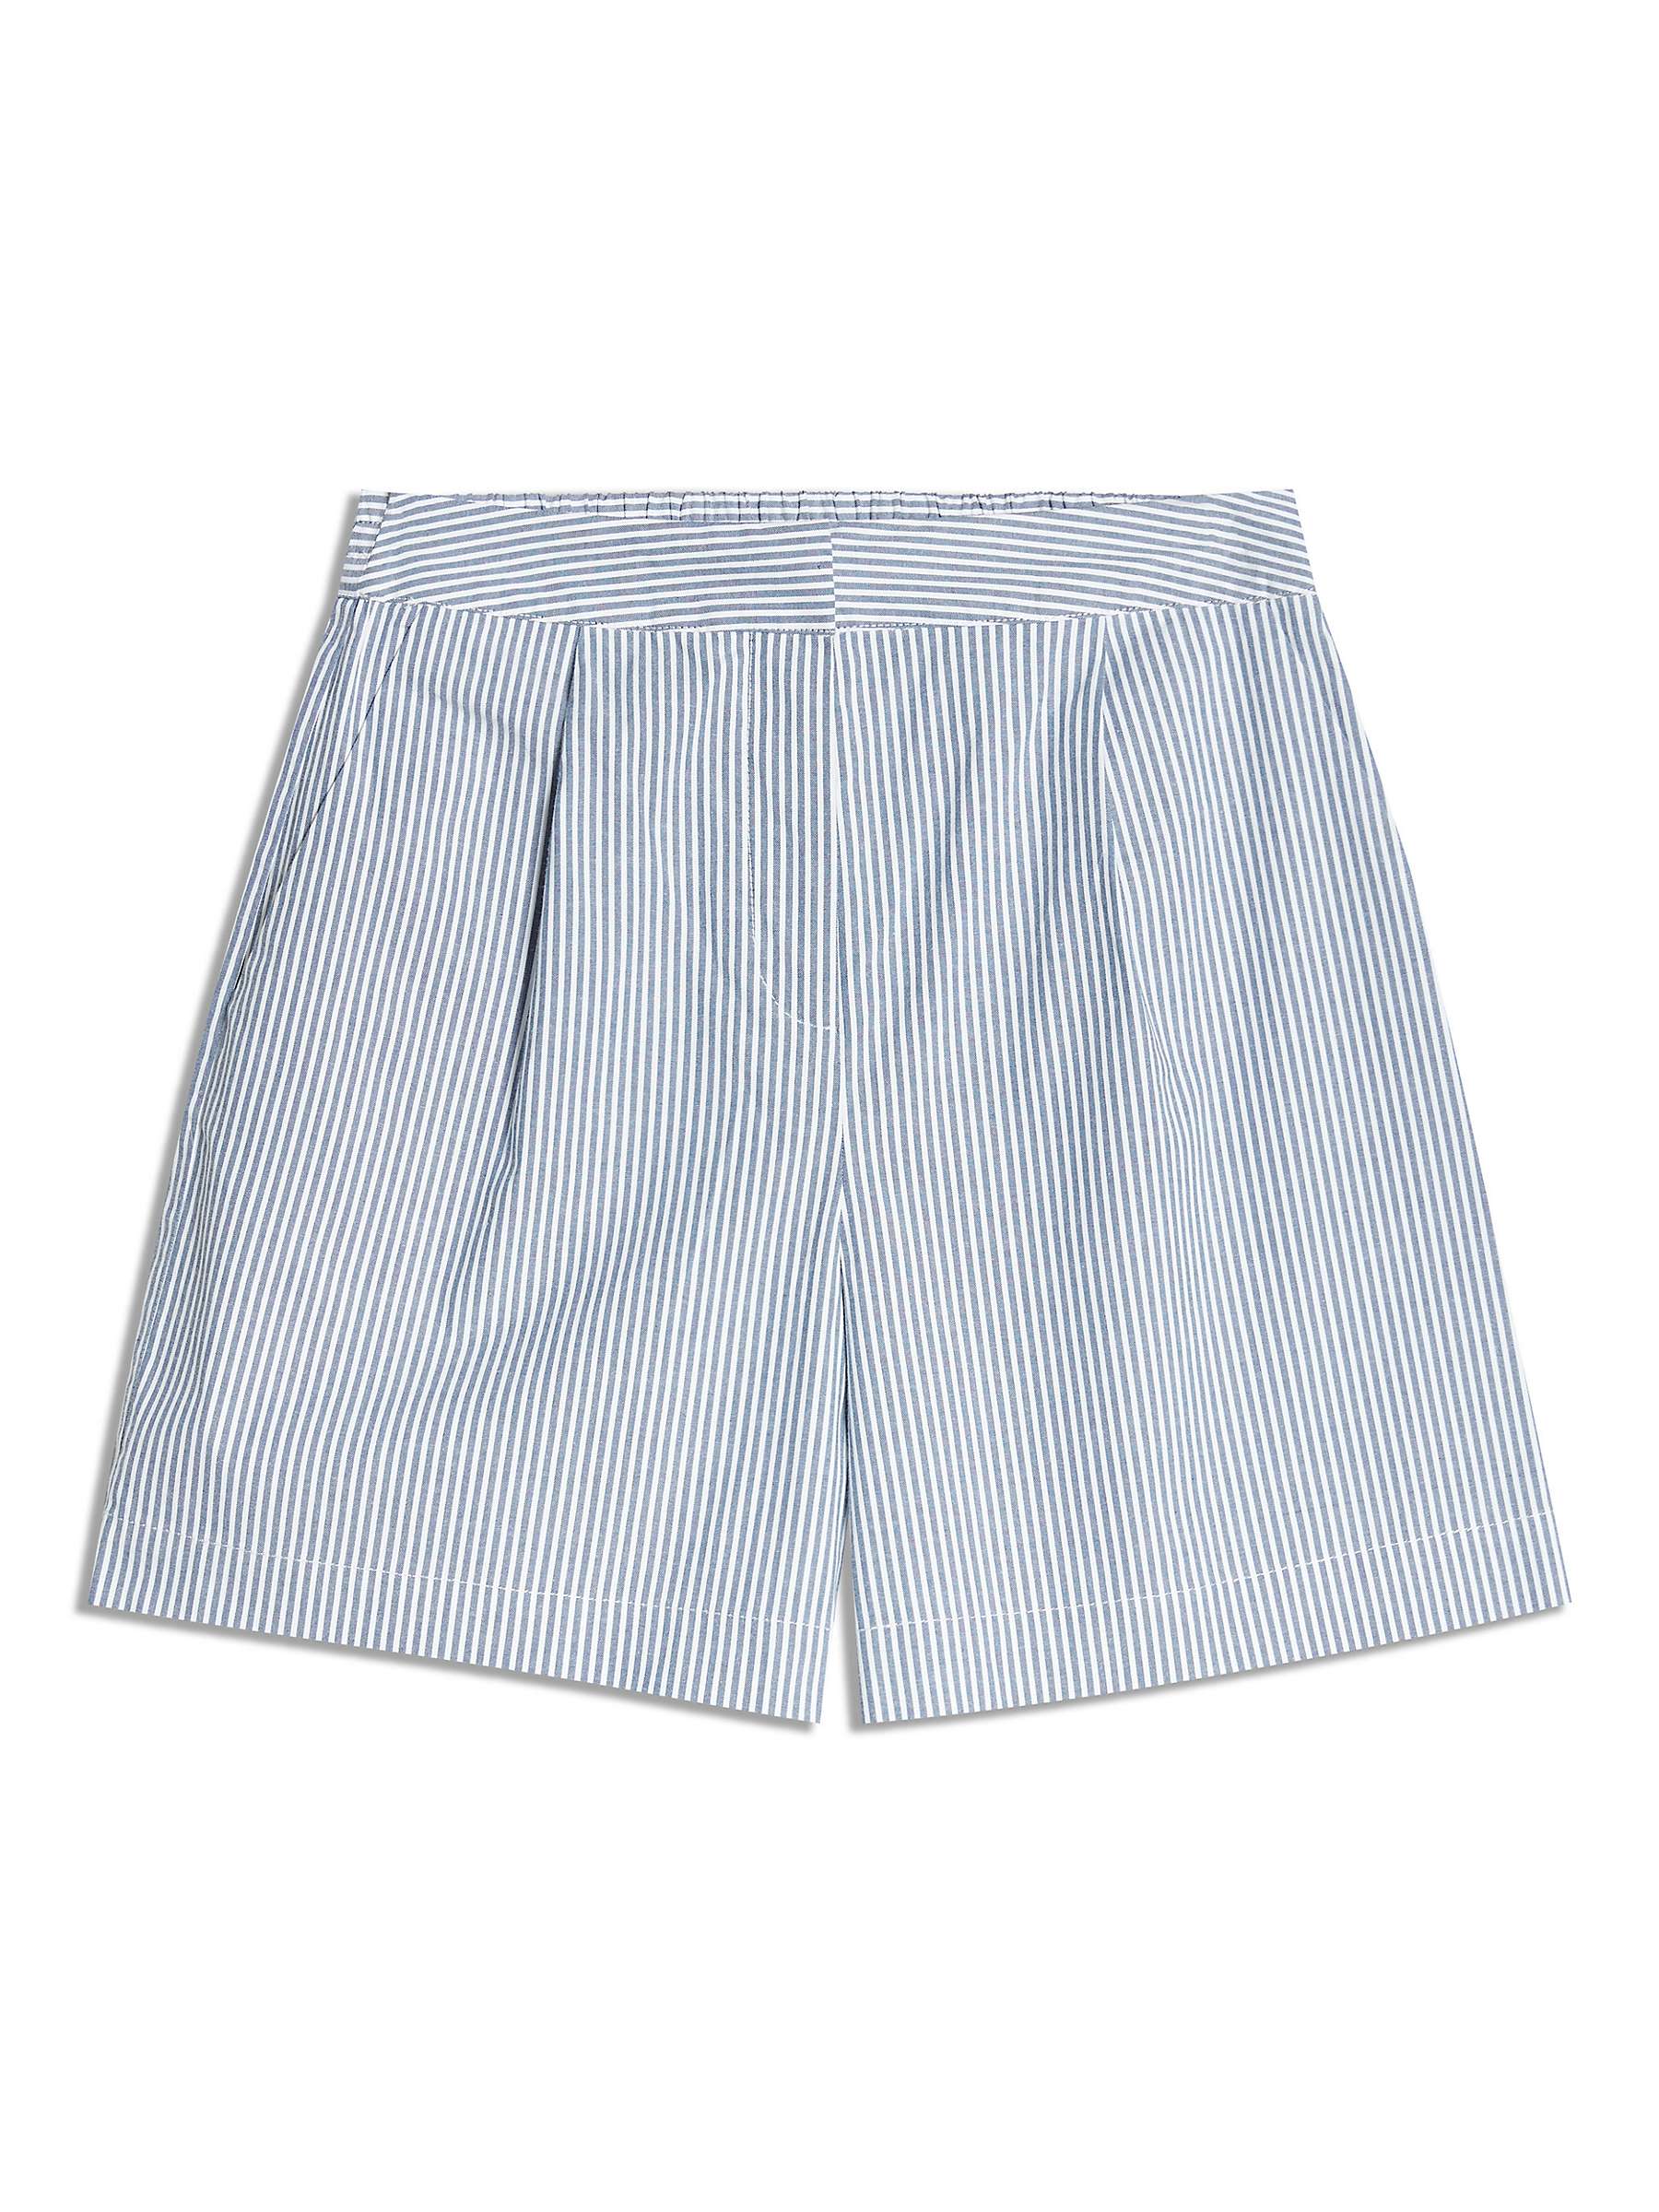 Buy Albaray Ticking Stripe Organic Cotton Shorts, Blue Online at johnlewis.com